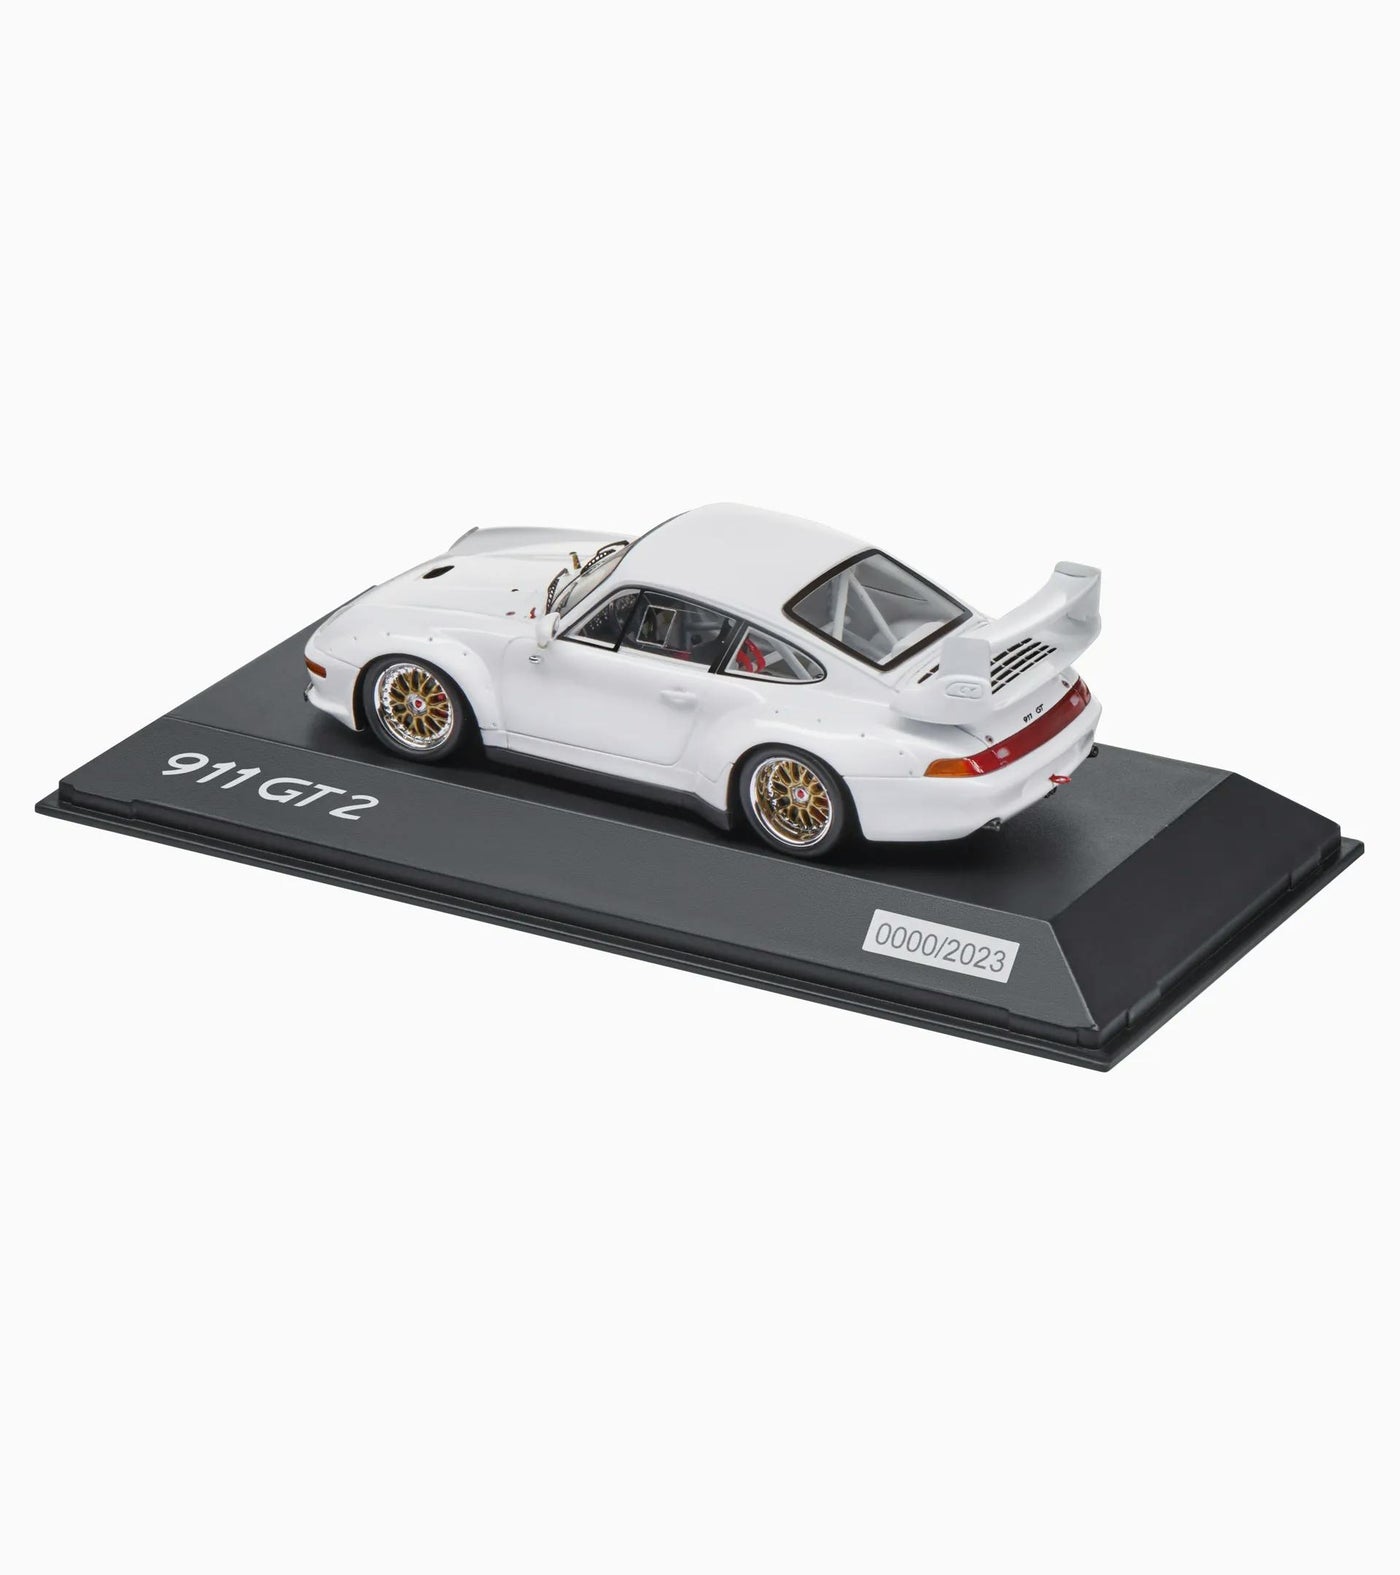 Porsche 911 GT2 (993) 1:43 Scale Model Car